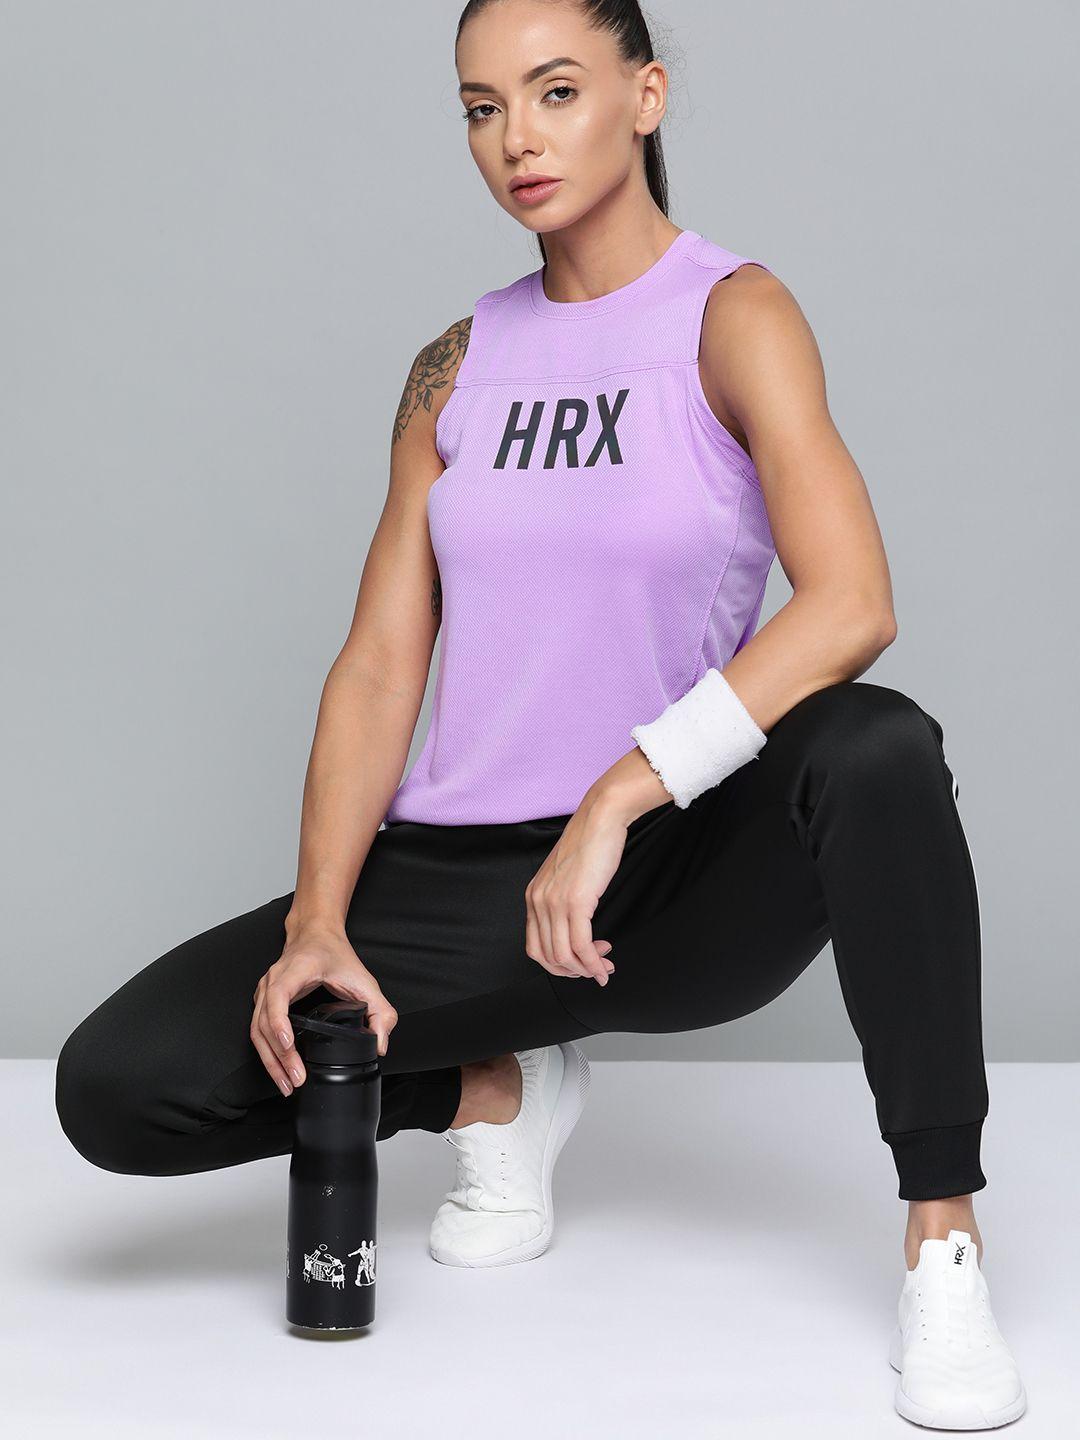 hrx by hrithik roshan running women digital lavender rapid-dry brand carrier tshirts